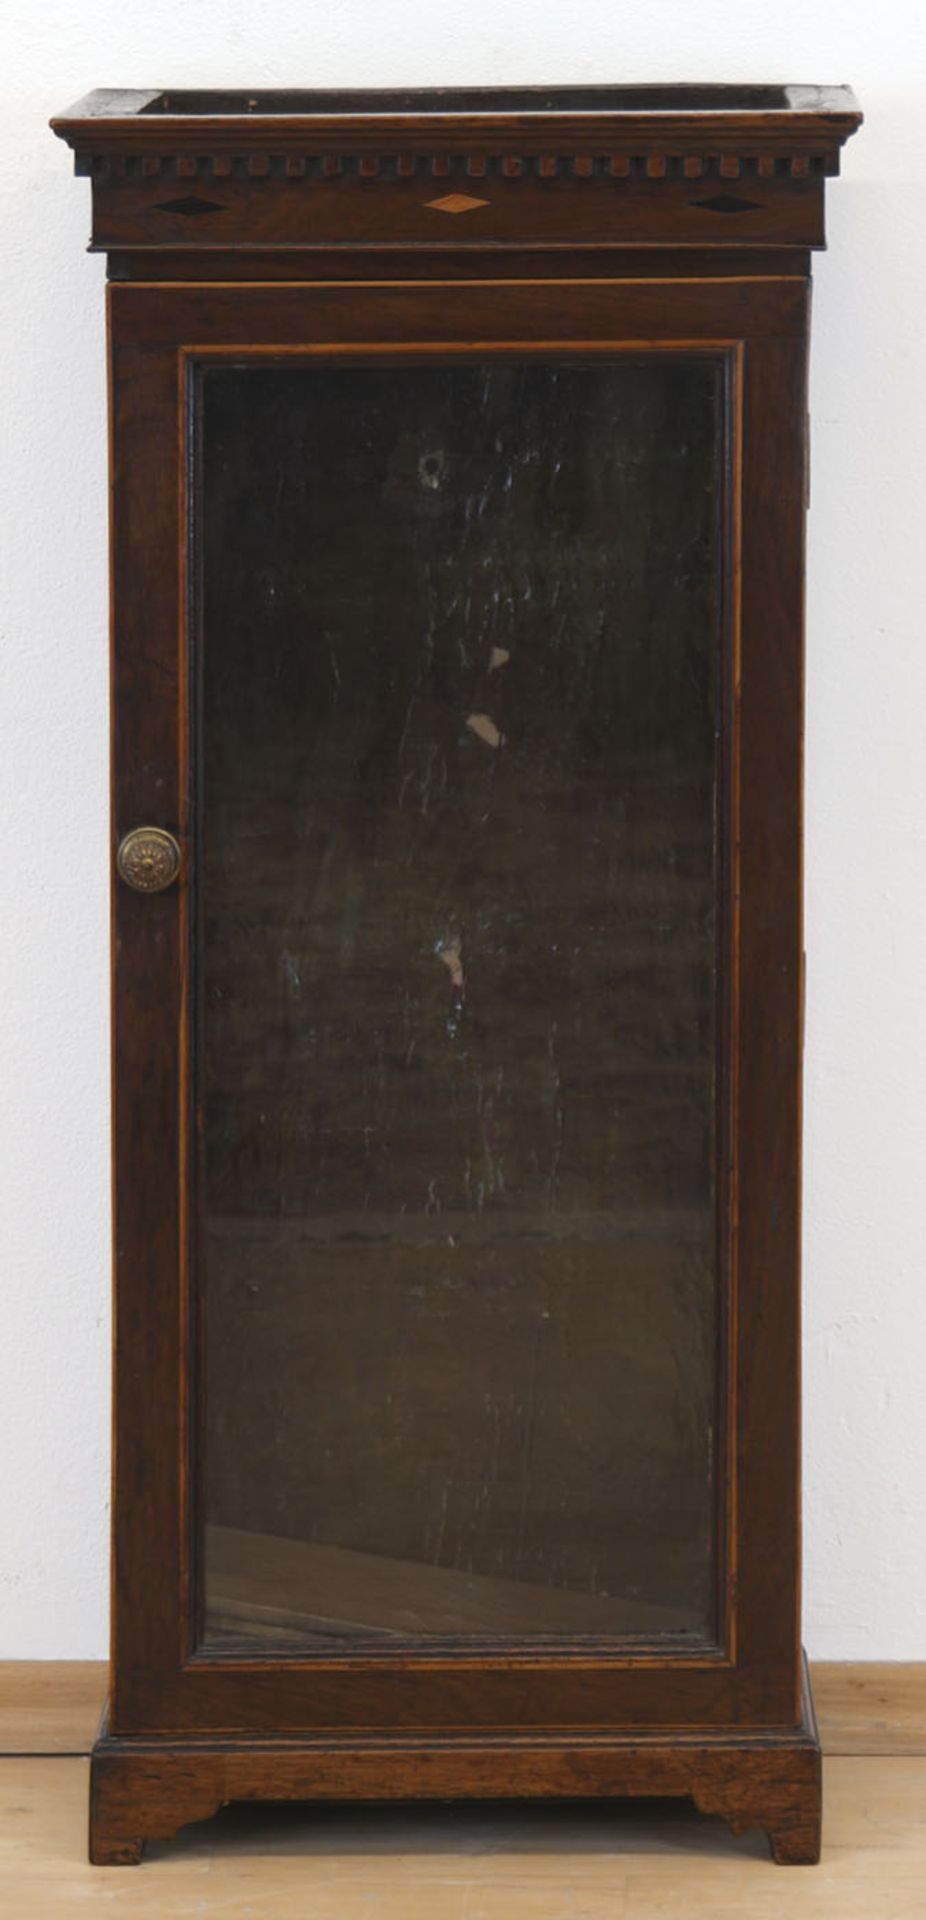 Kleine Vitrine, England Mitte 19. Jh., Mahagoni, intarsiert, 1-türiger, frontseitig verglast